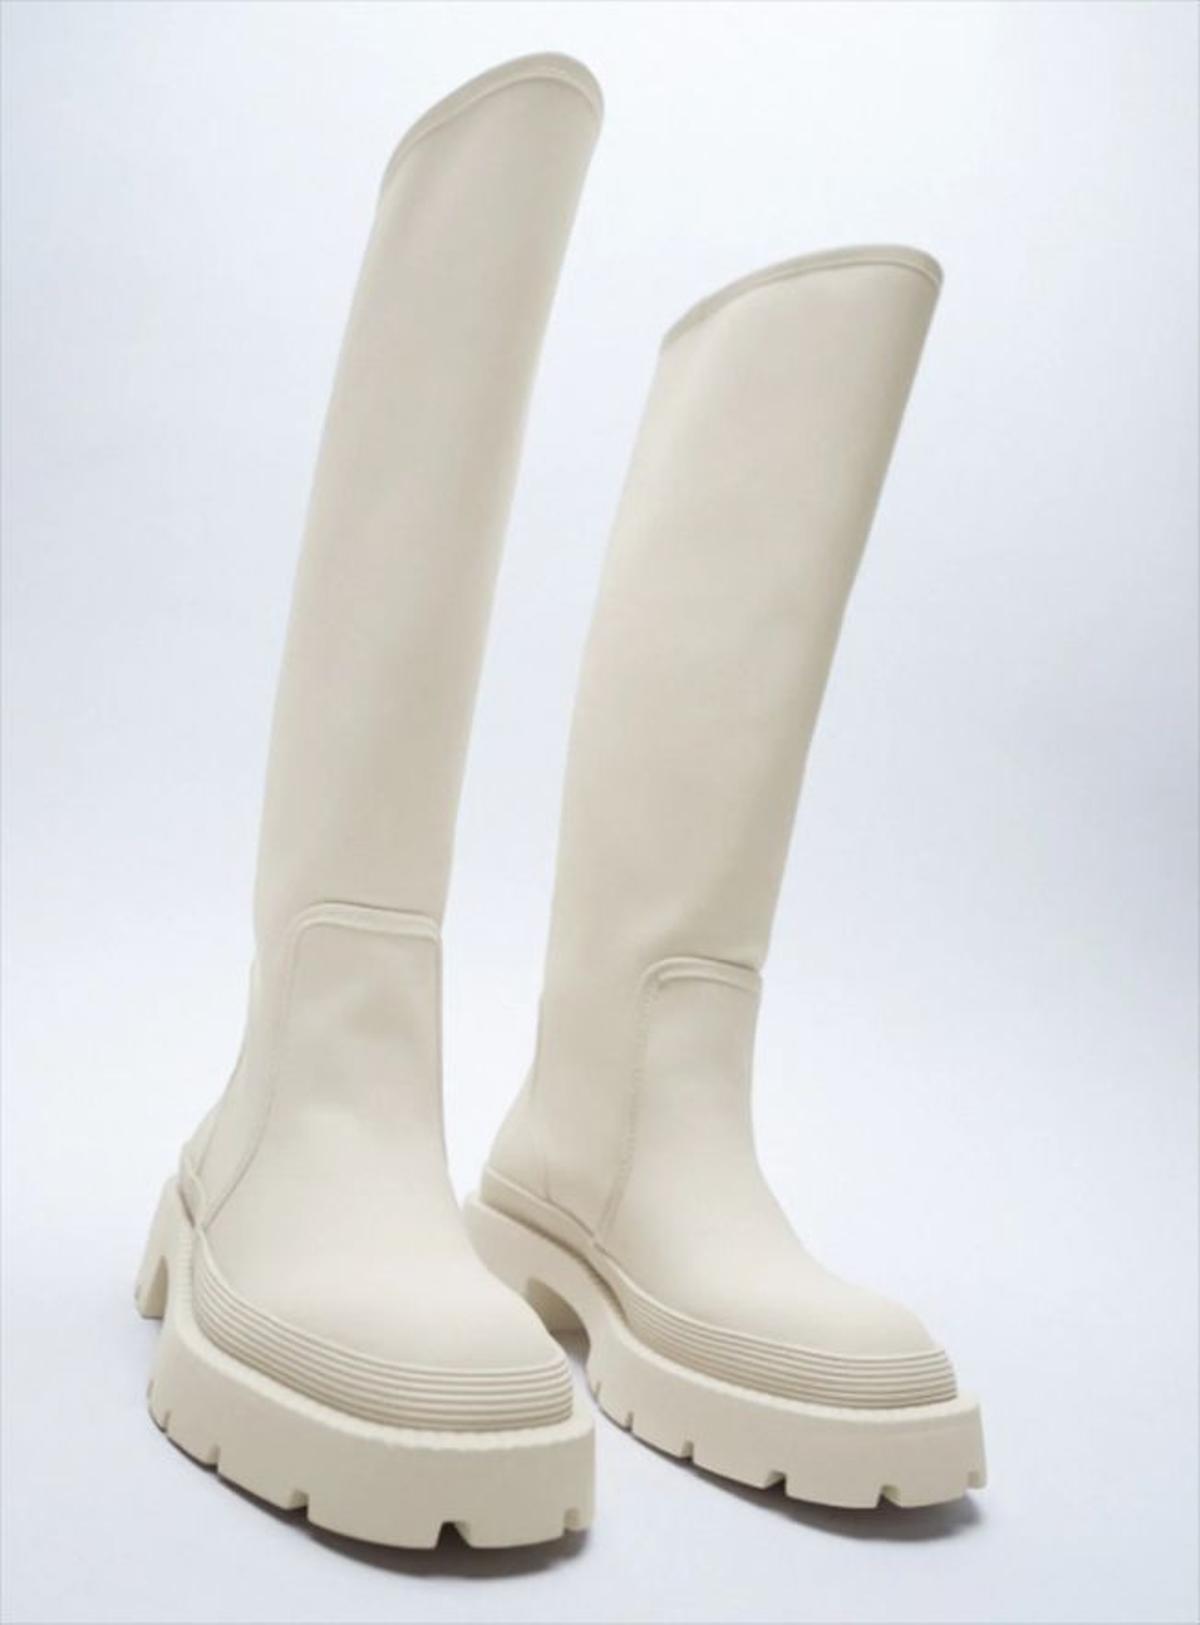 Botas blancas altas de Zara